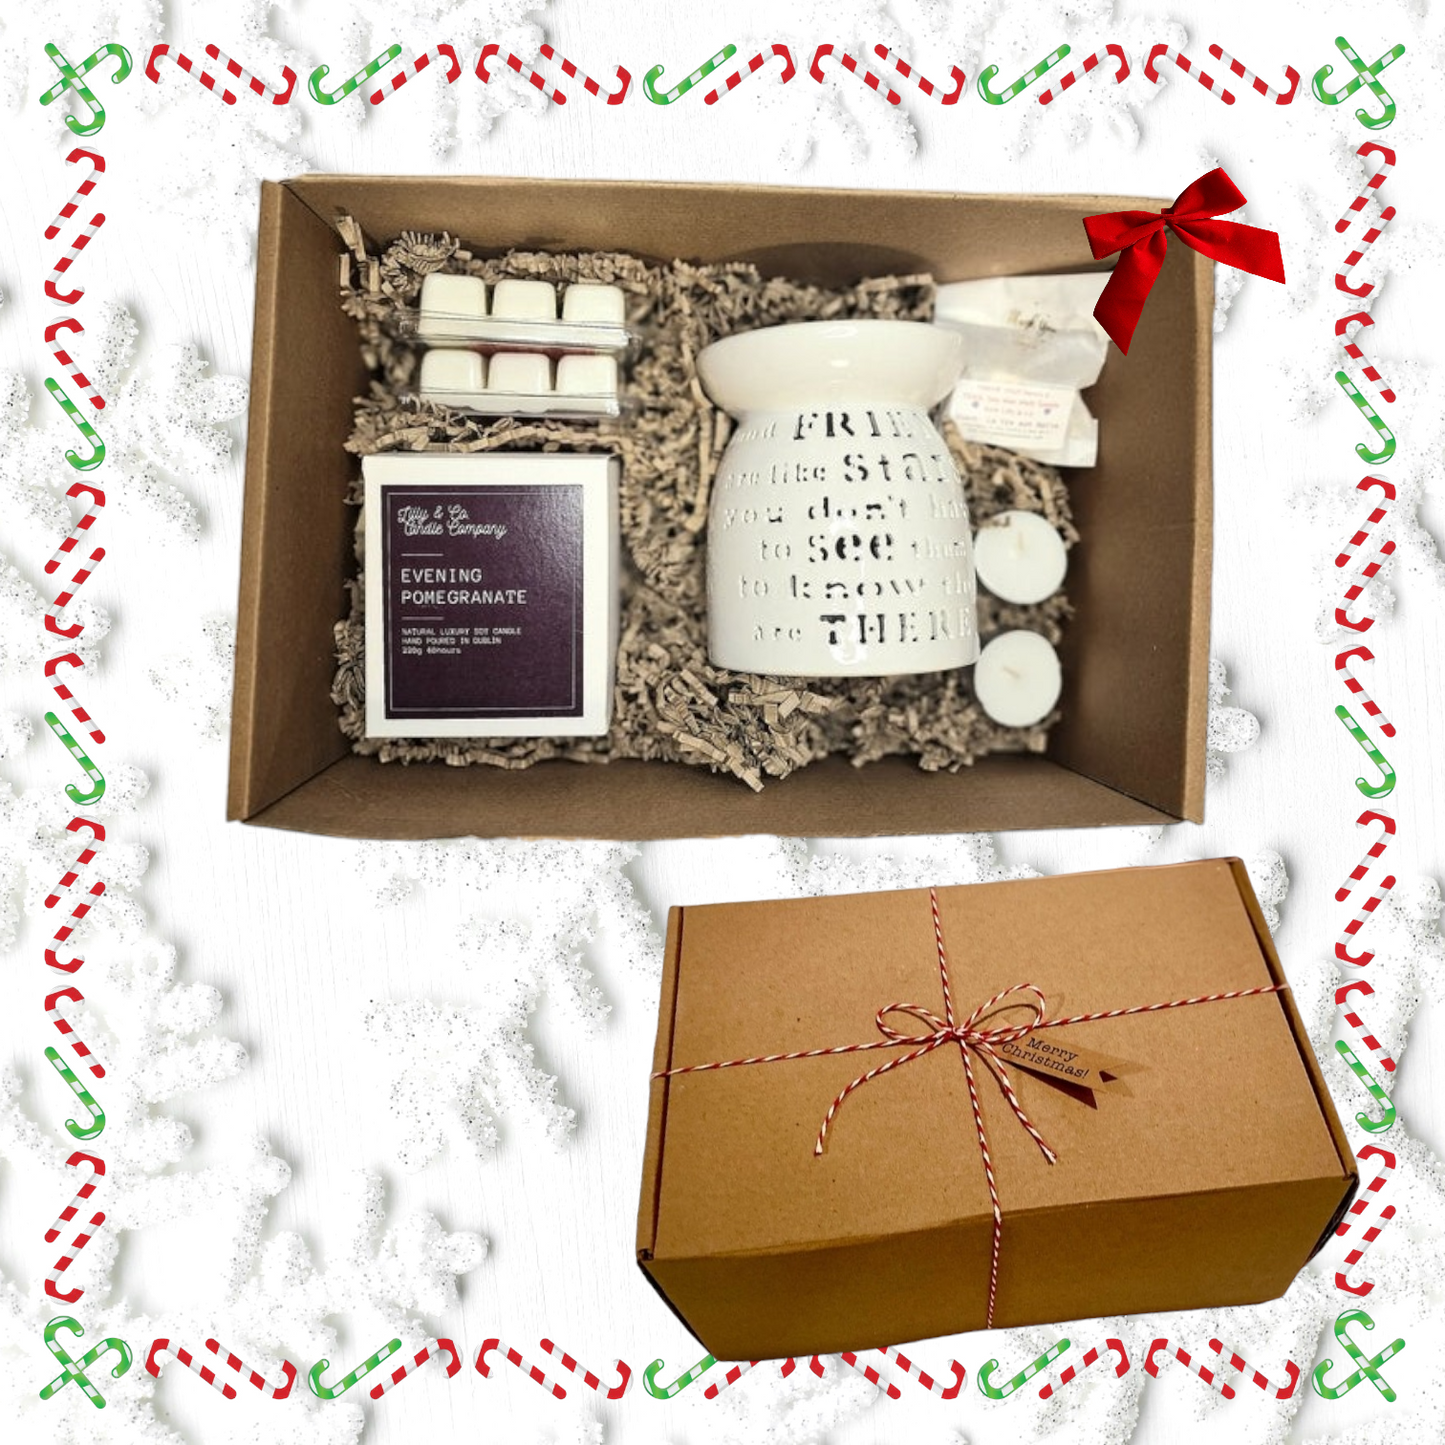 Gift set, gift set for women, verbena, verbena candle, gift box, candl